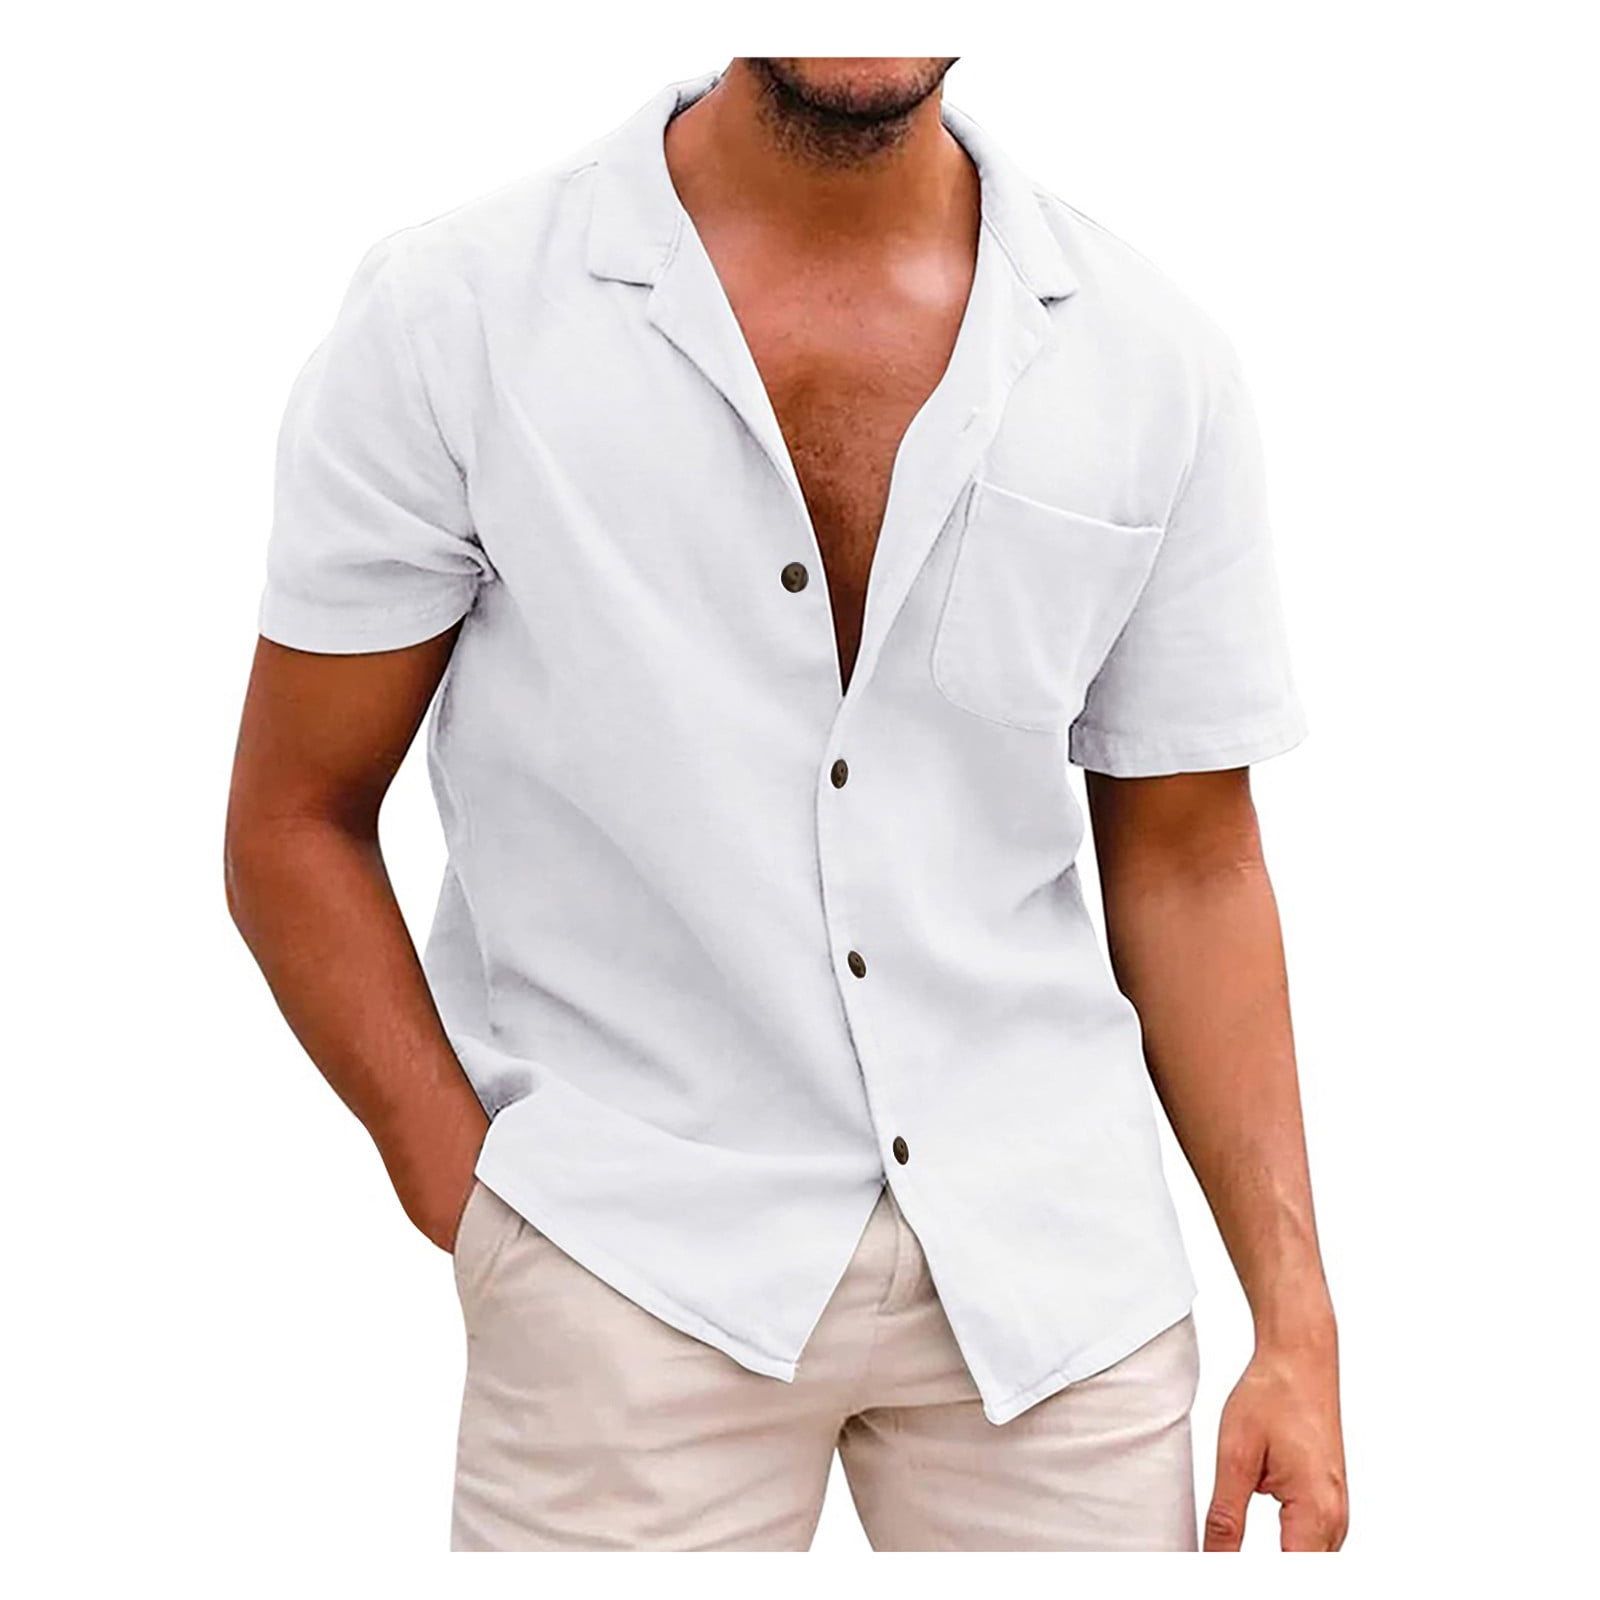 RYRJJ On Clearance Men's Short Sleeve Regular Fit Dress Shirts Button Down  Shirts Summer Casual Beach Shirt with Chest Pocket White XL 